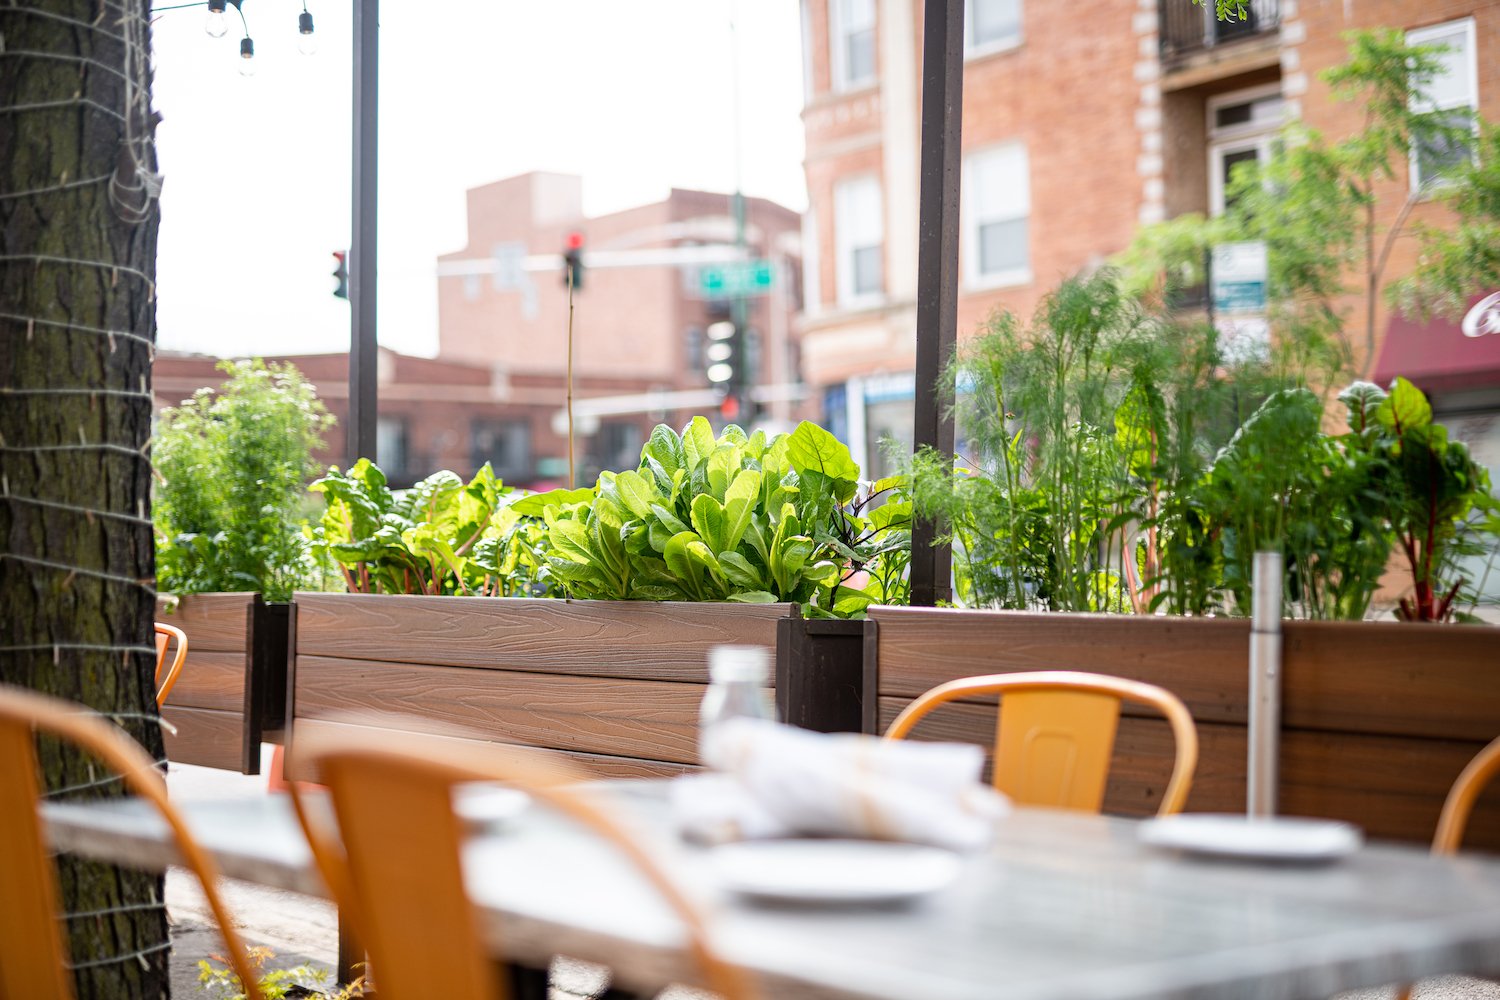 Sidewalk Cafe Plants 2.jpg